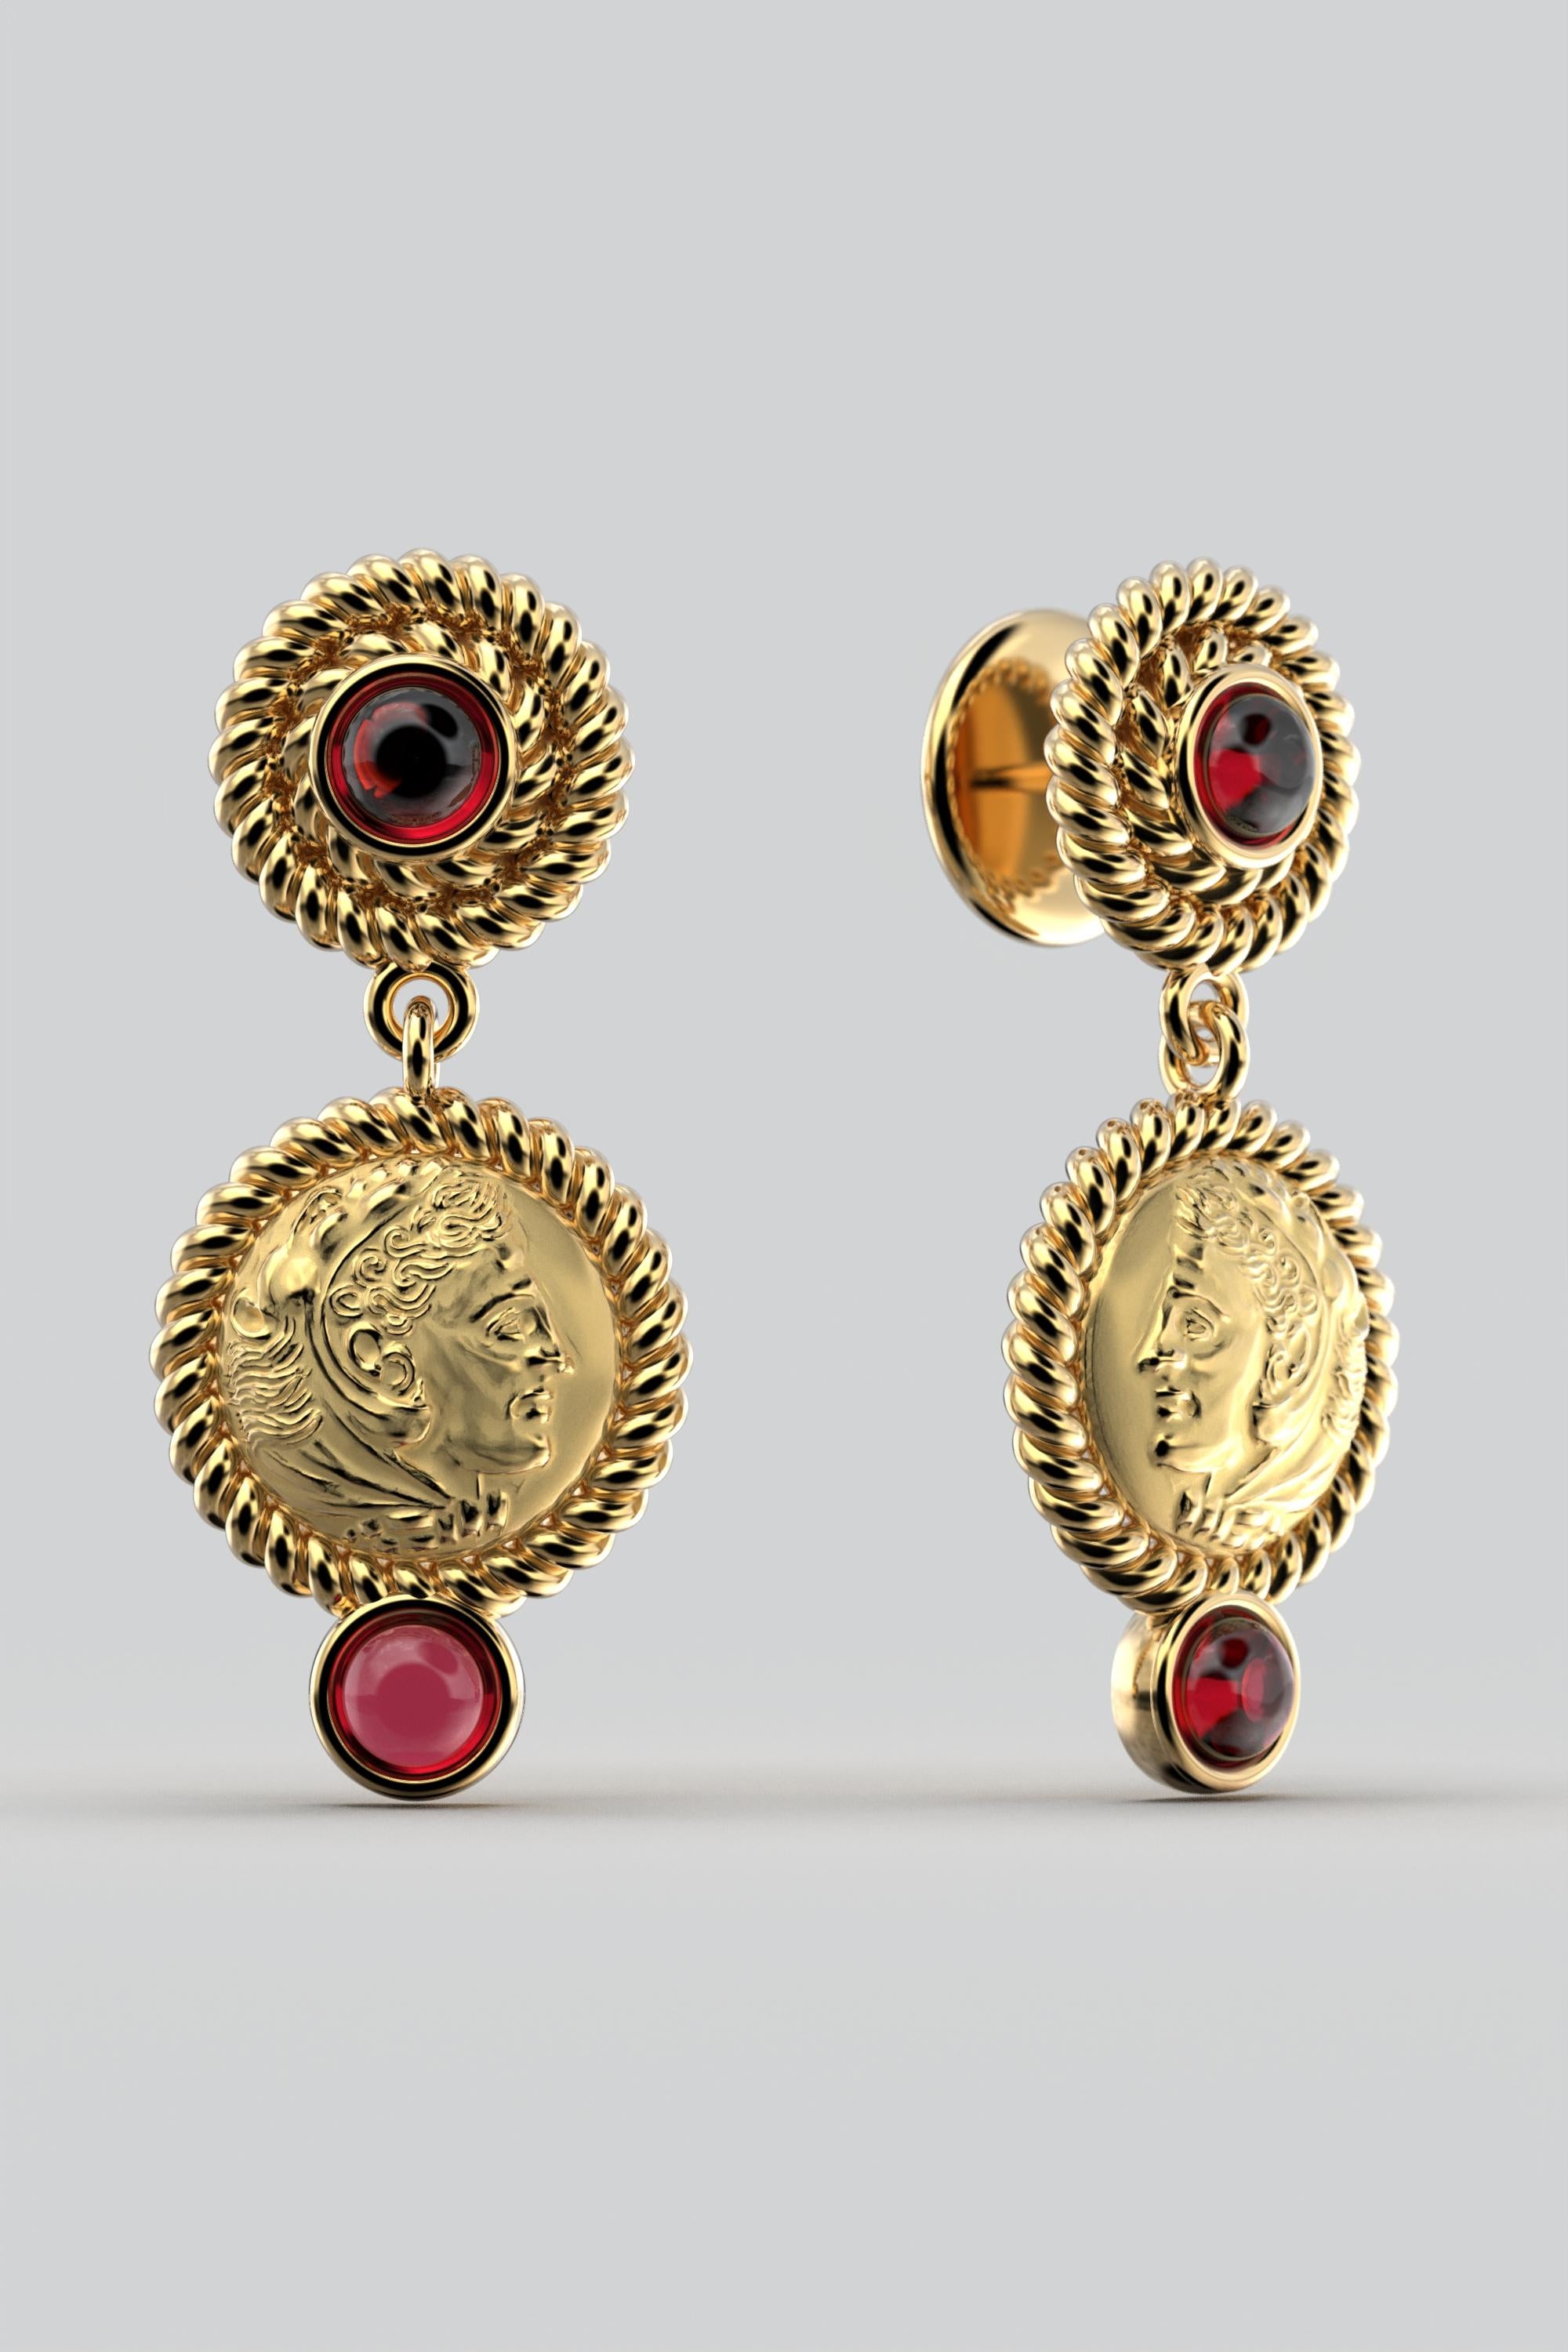 ancient italian jewelry